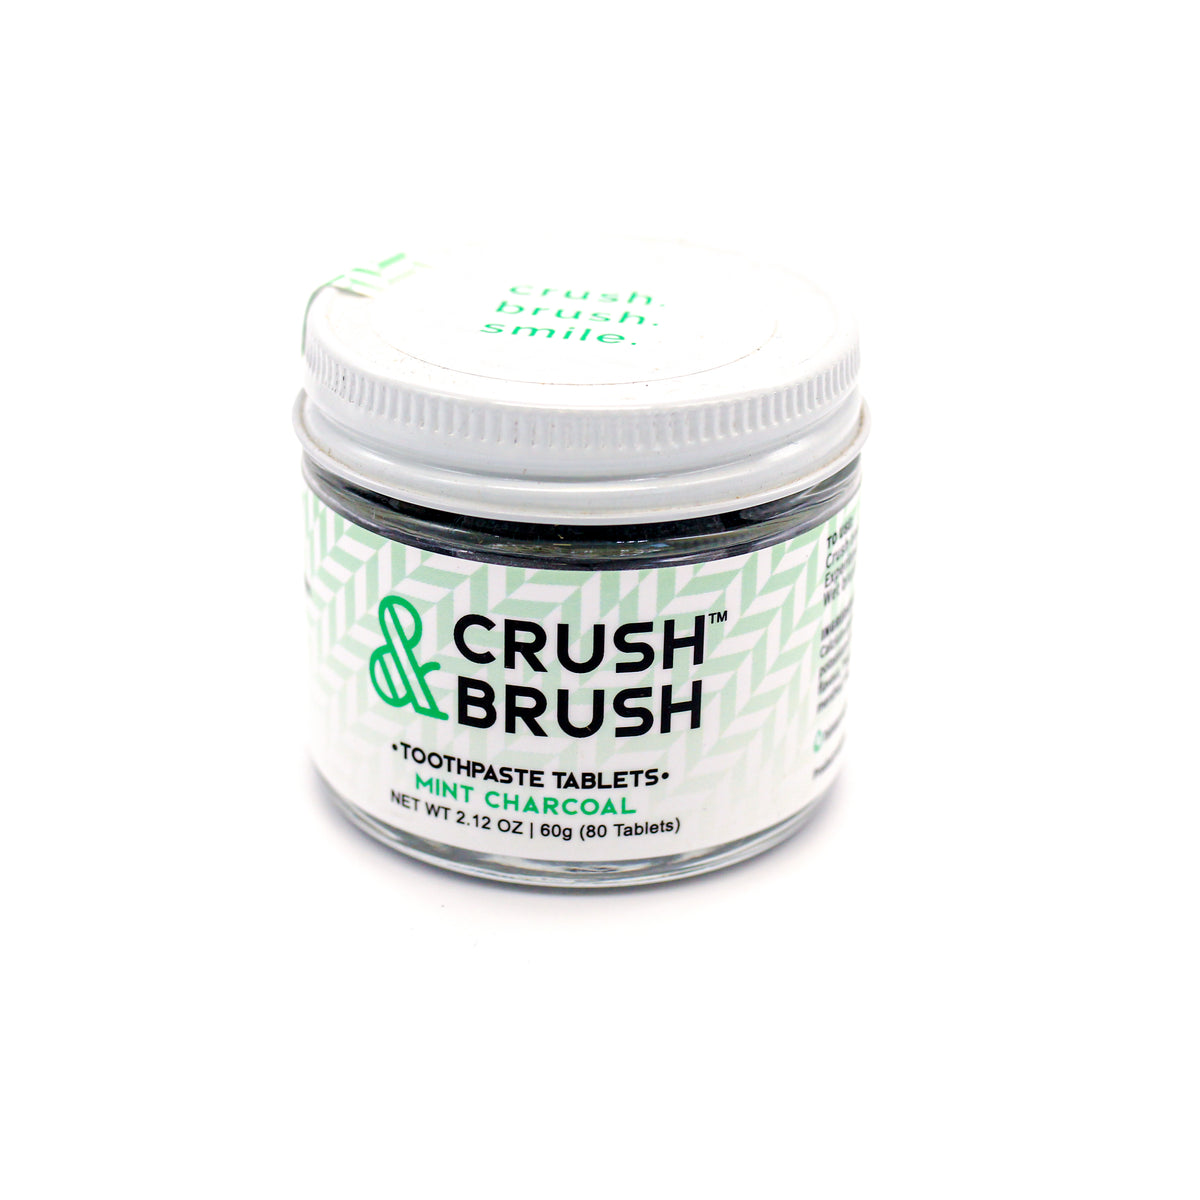 Nelson Naturals USA Crush &amp; Brush Mint Charcoal